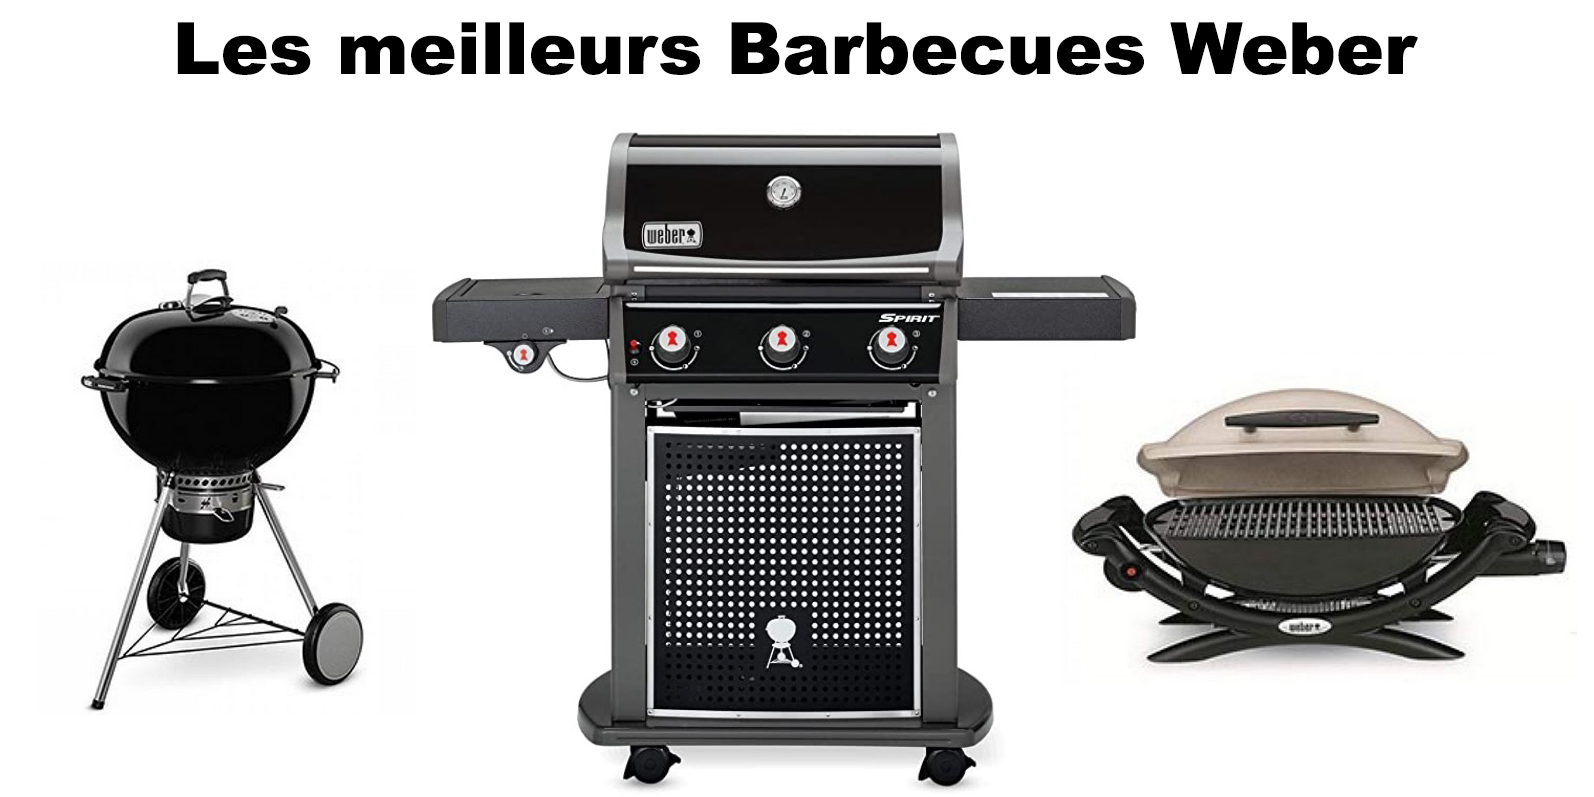 Meilleur Barbecue Weber Comparatif